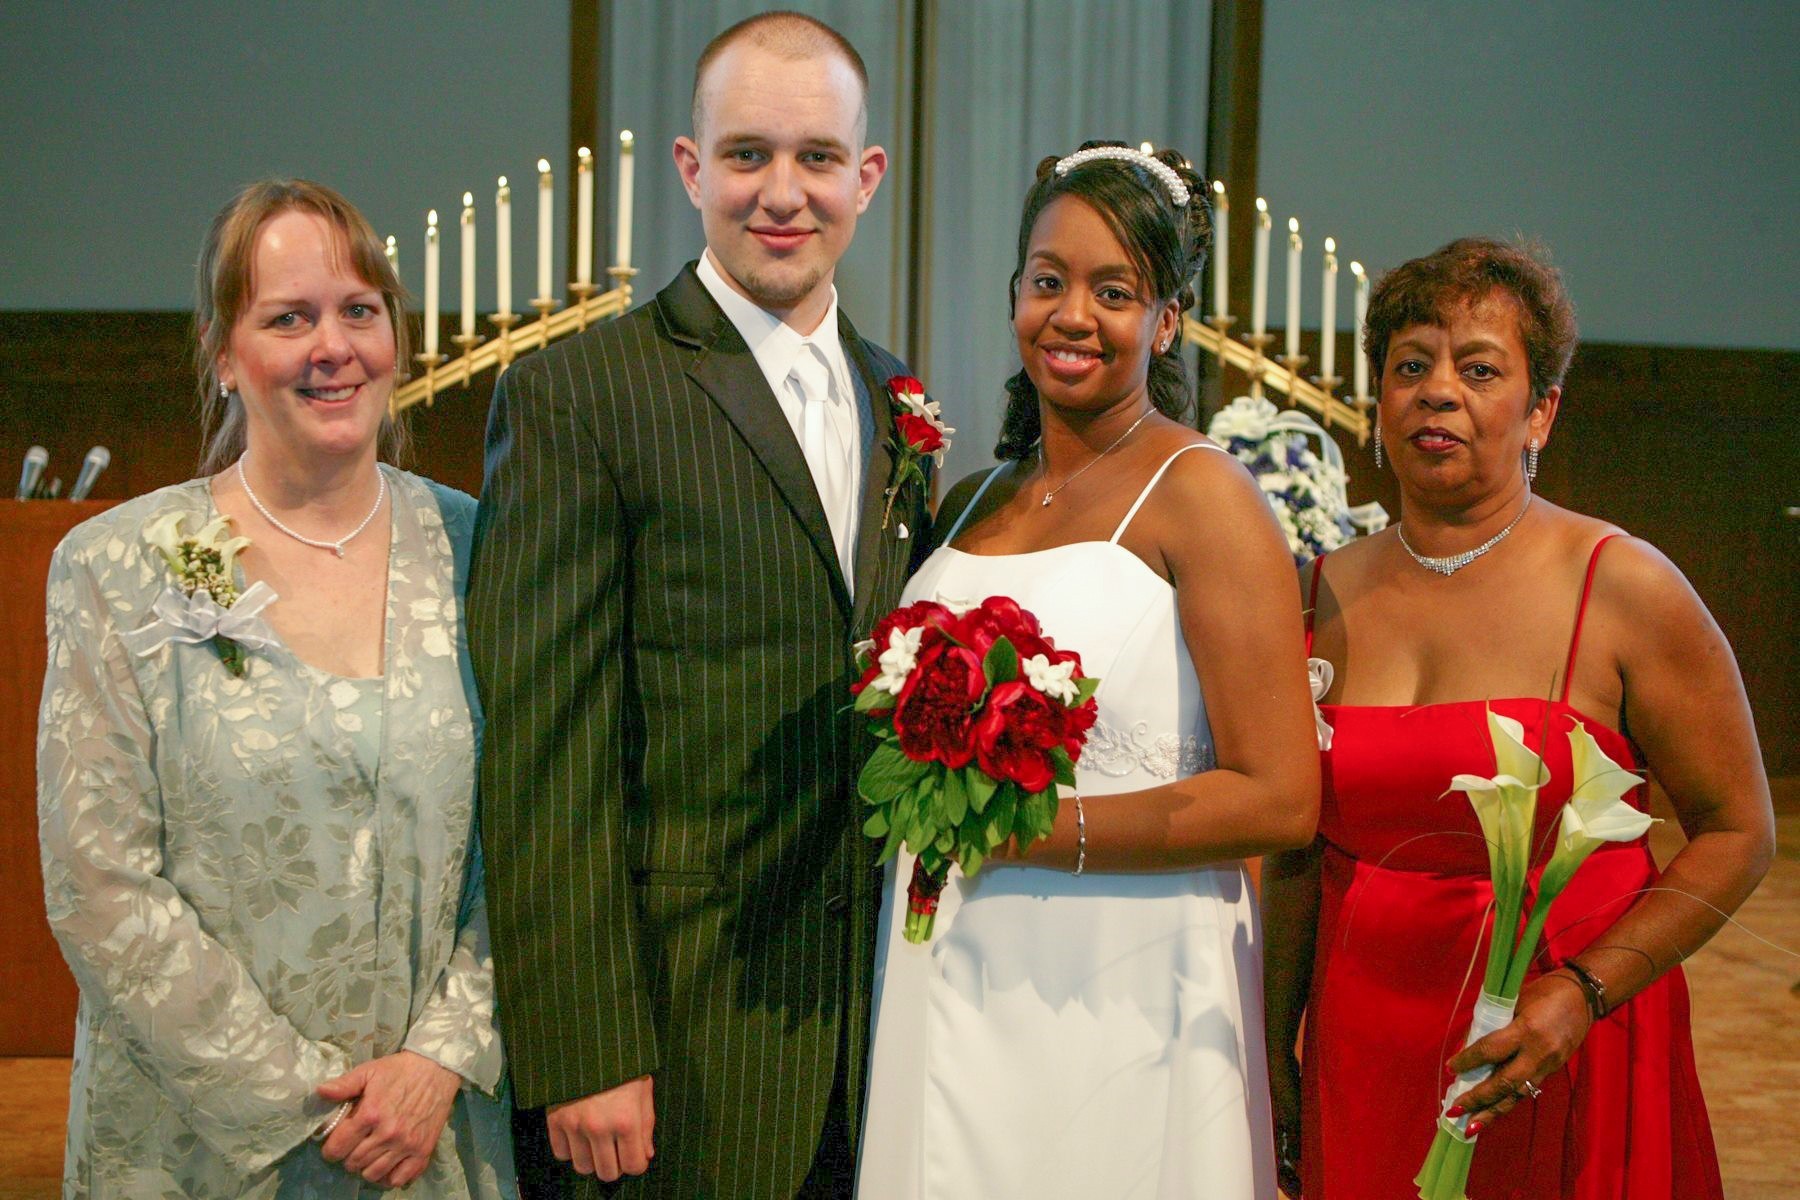 No Interracial Couples At Prom